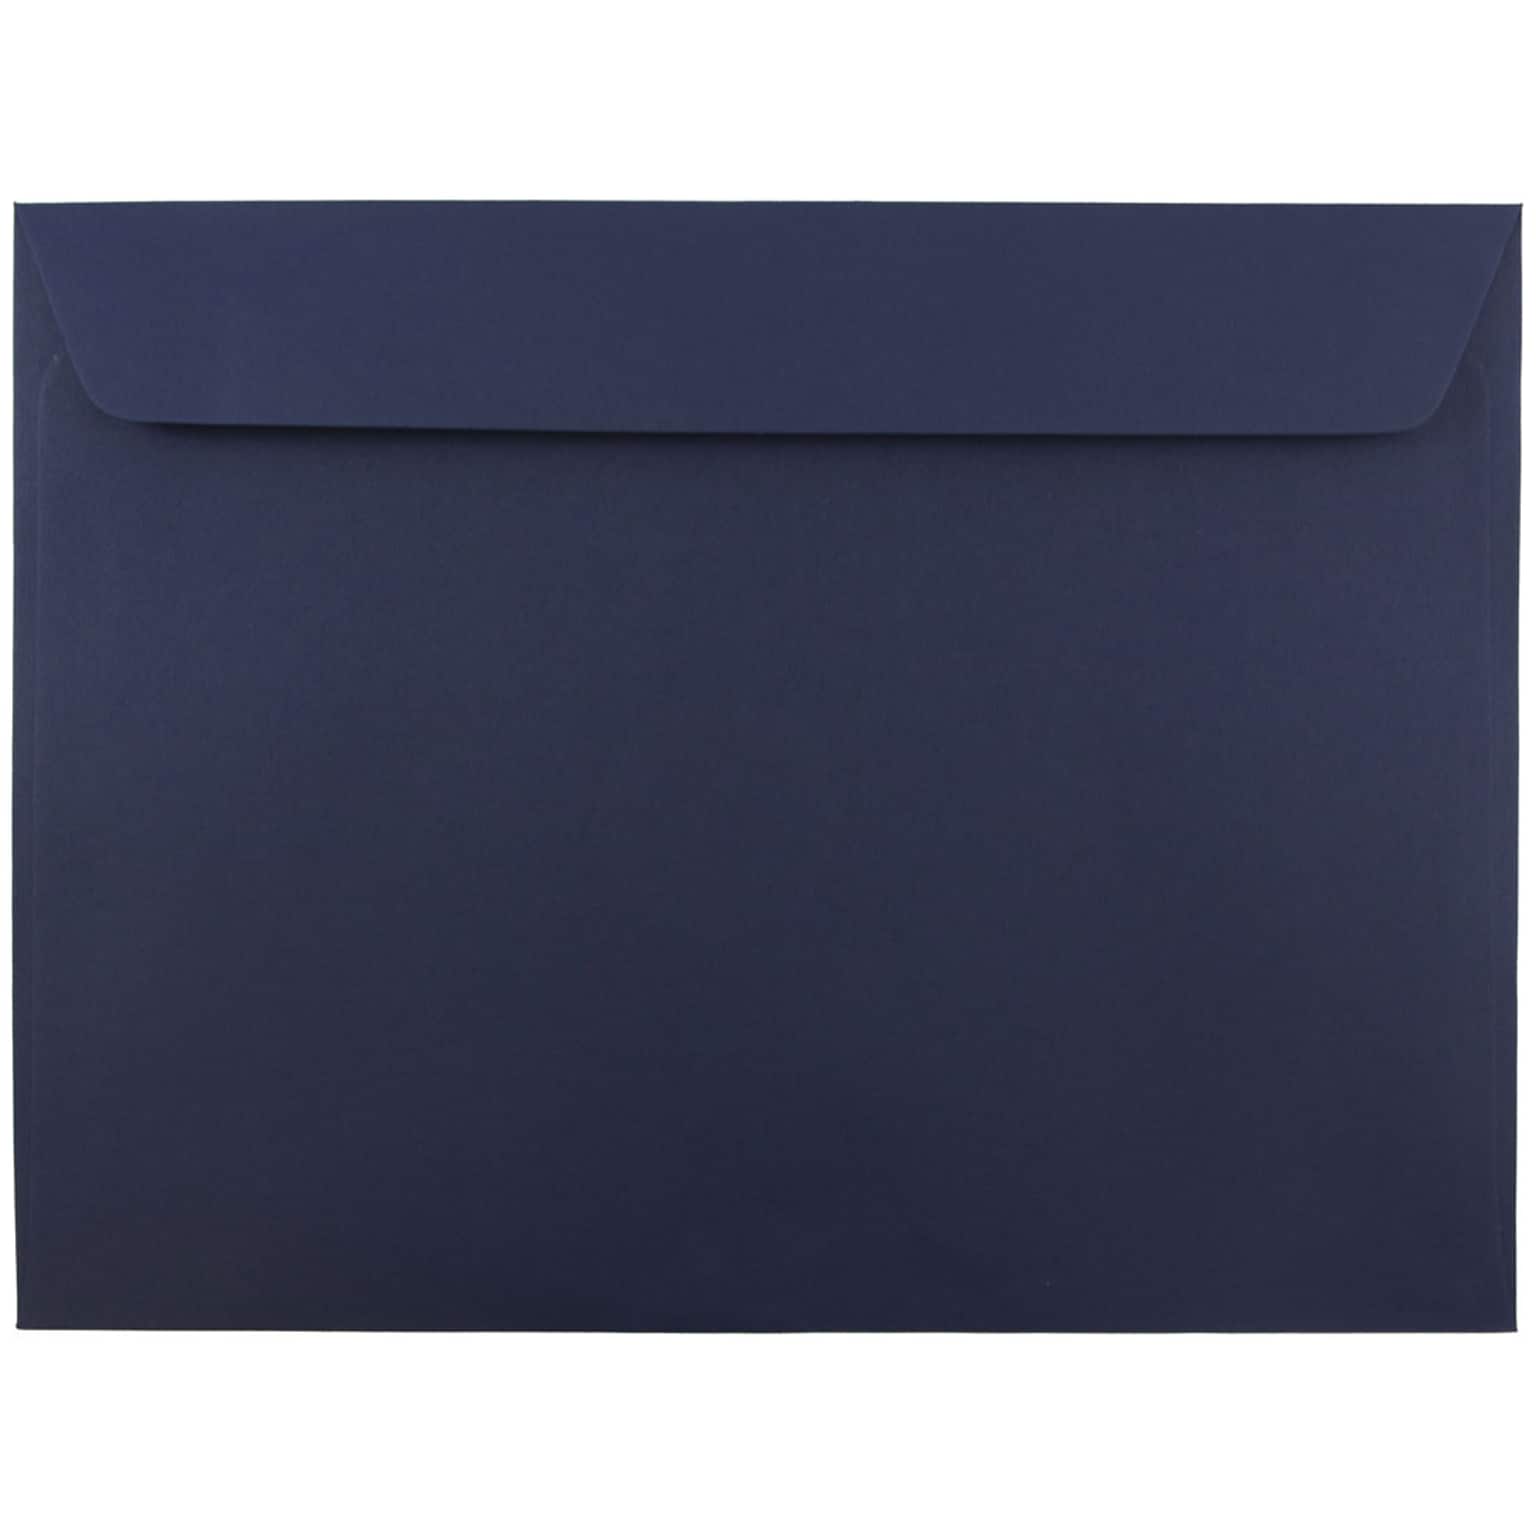 JAM Paper Booklet Envelope, 9 x 12, Navy Blue, 250/Box (263916011H)